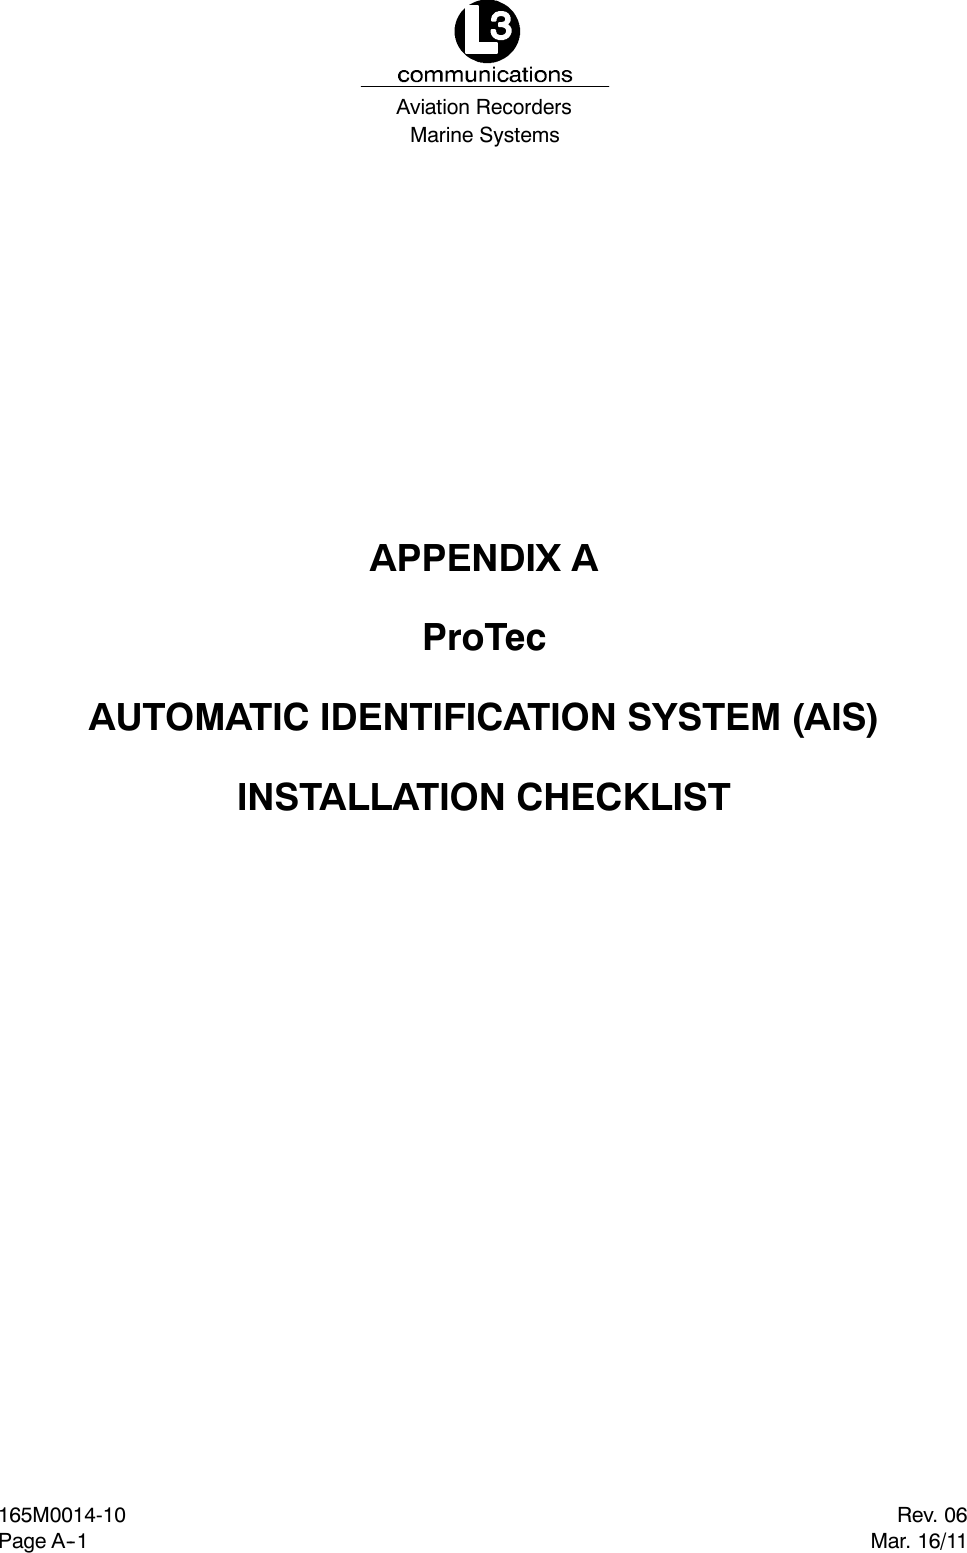 Marine SystemsAviation RecordersRev. 06Mar. 16/11165M0014-10Page A--1APPENDIX AProTecAUTOMATIC IDENTIFICATION SYSTEM (AIS)INSTALLATION CHECKLIST